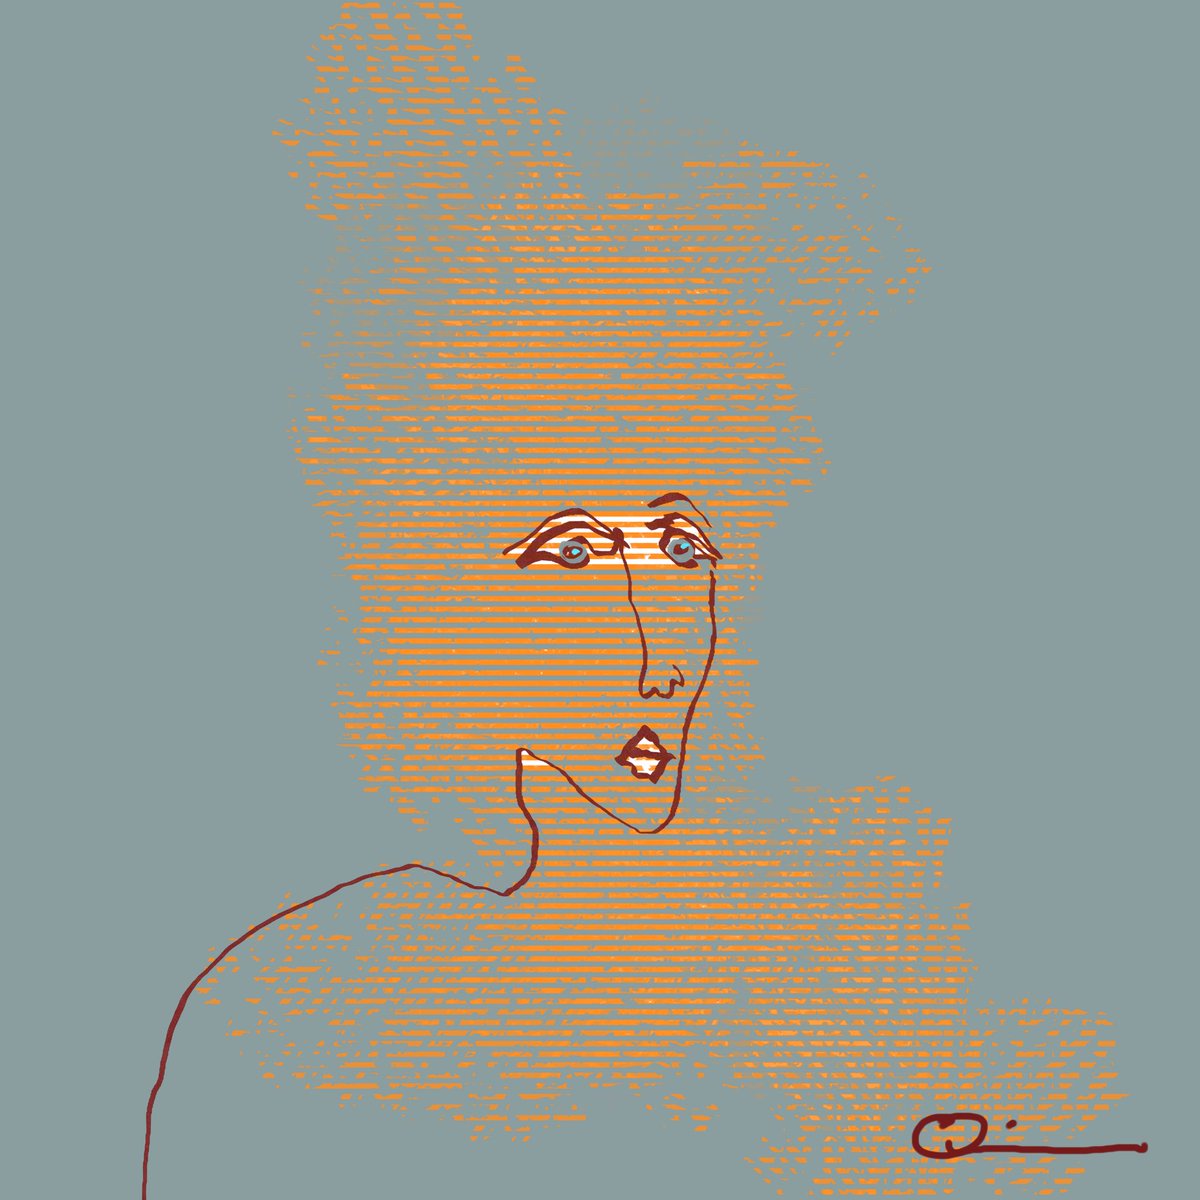 “Mystified” … linktr.ee/jeffquiros #artwork #art #avantgarde #modernart #painting #illustration #figurativeart #figurative #ink #expressionism #artbrut #contemporaryart #fineart #sketch #portrait #artgallery #drawing #flamingabstracts #interiordesign #hospitalitydesign